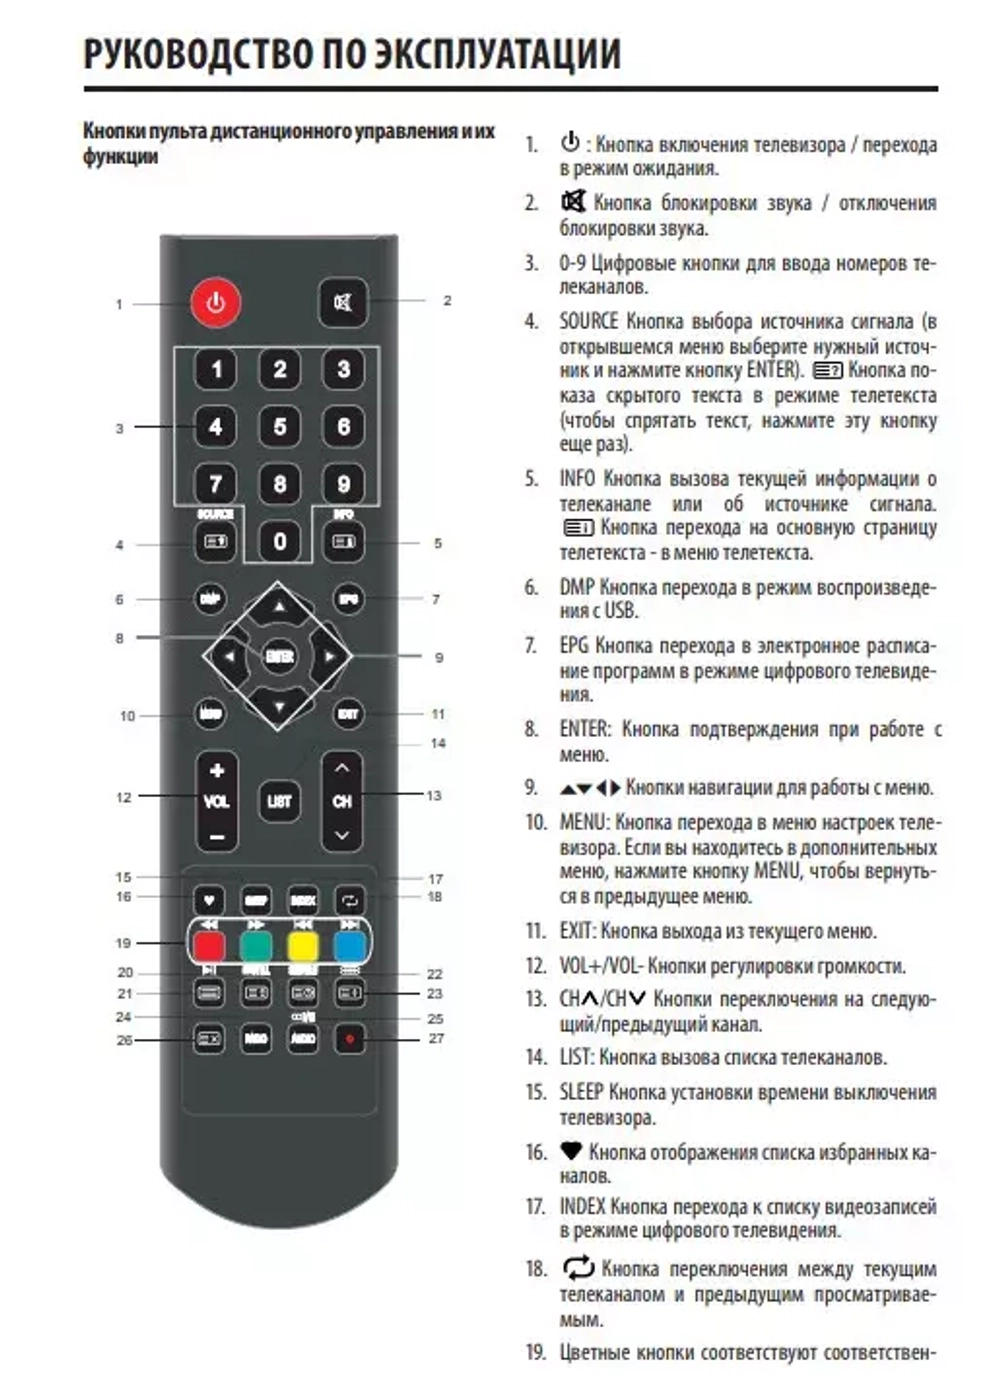 HD Телевизор Supra LED 59,9 см с цифровым тюнером DVB-T/T2/C, мультимедиа плеером, телетекстом и таймером сна 23.6"